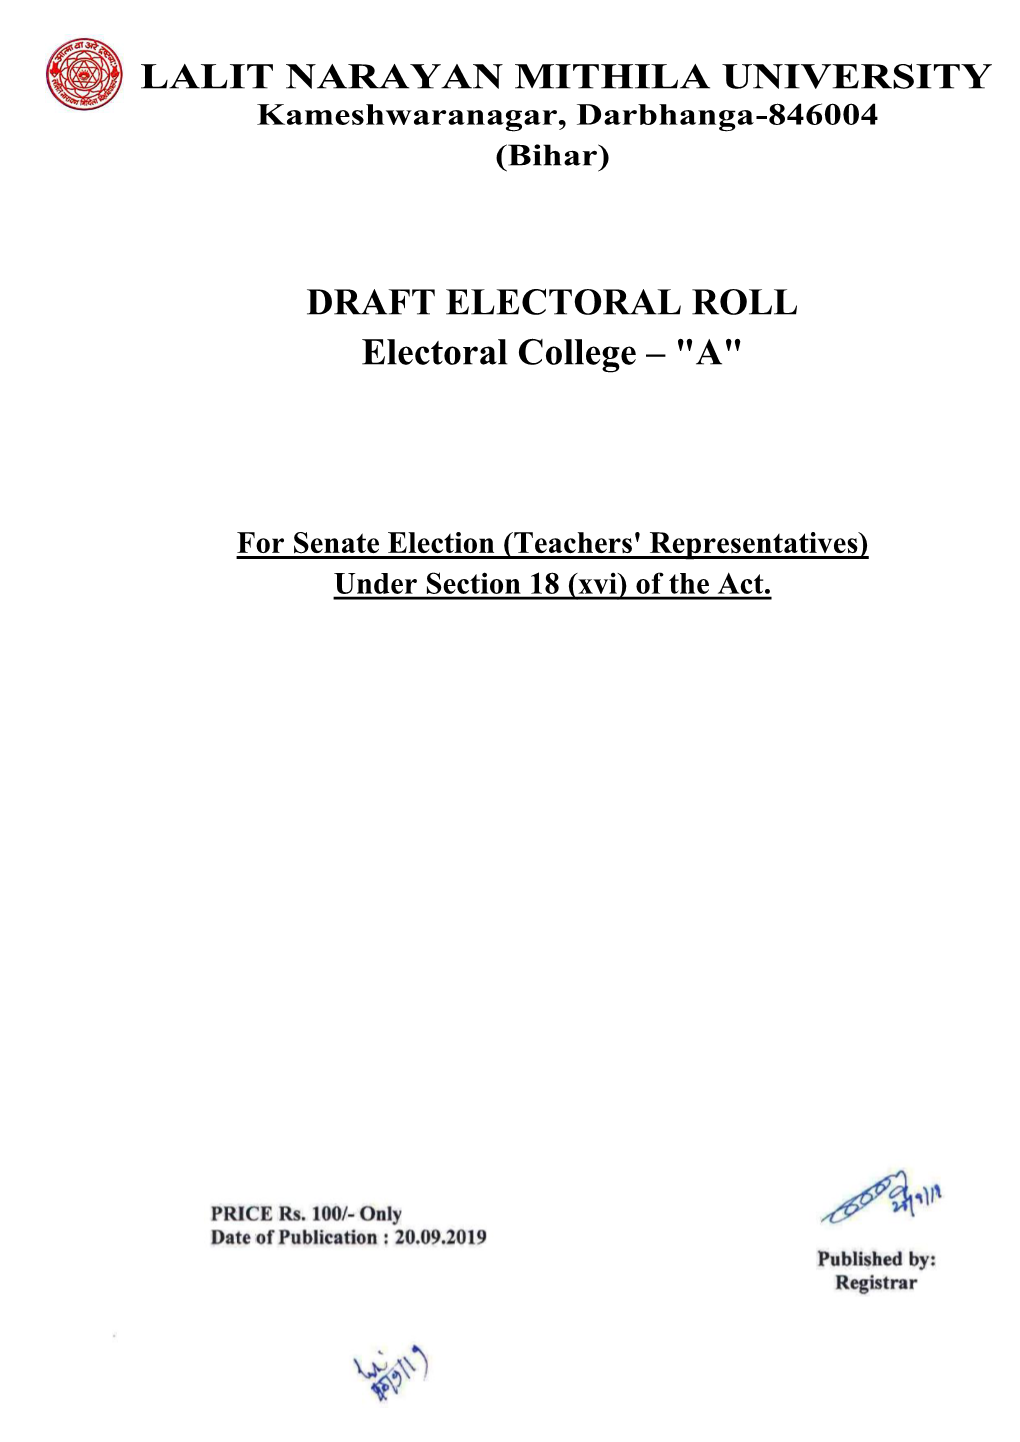 DRAFT ELECTORAL ROLL Electoral College – "A"